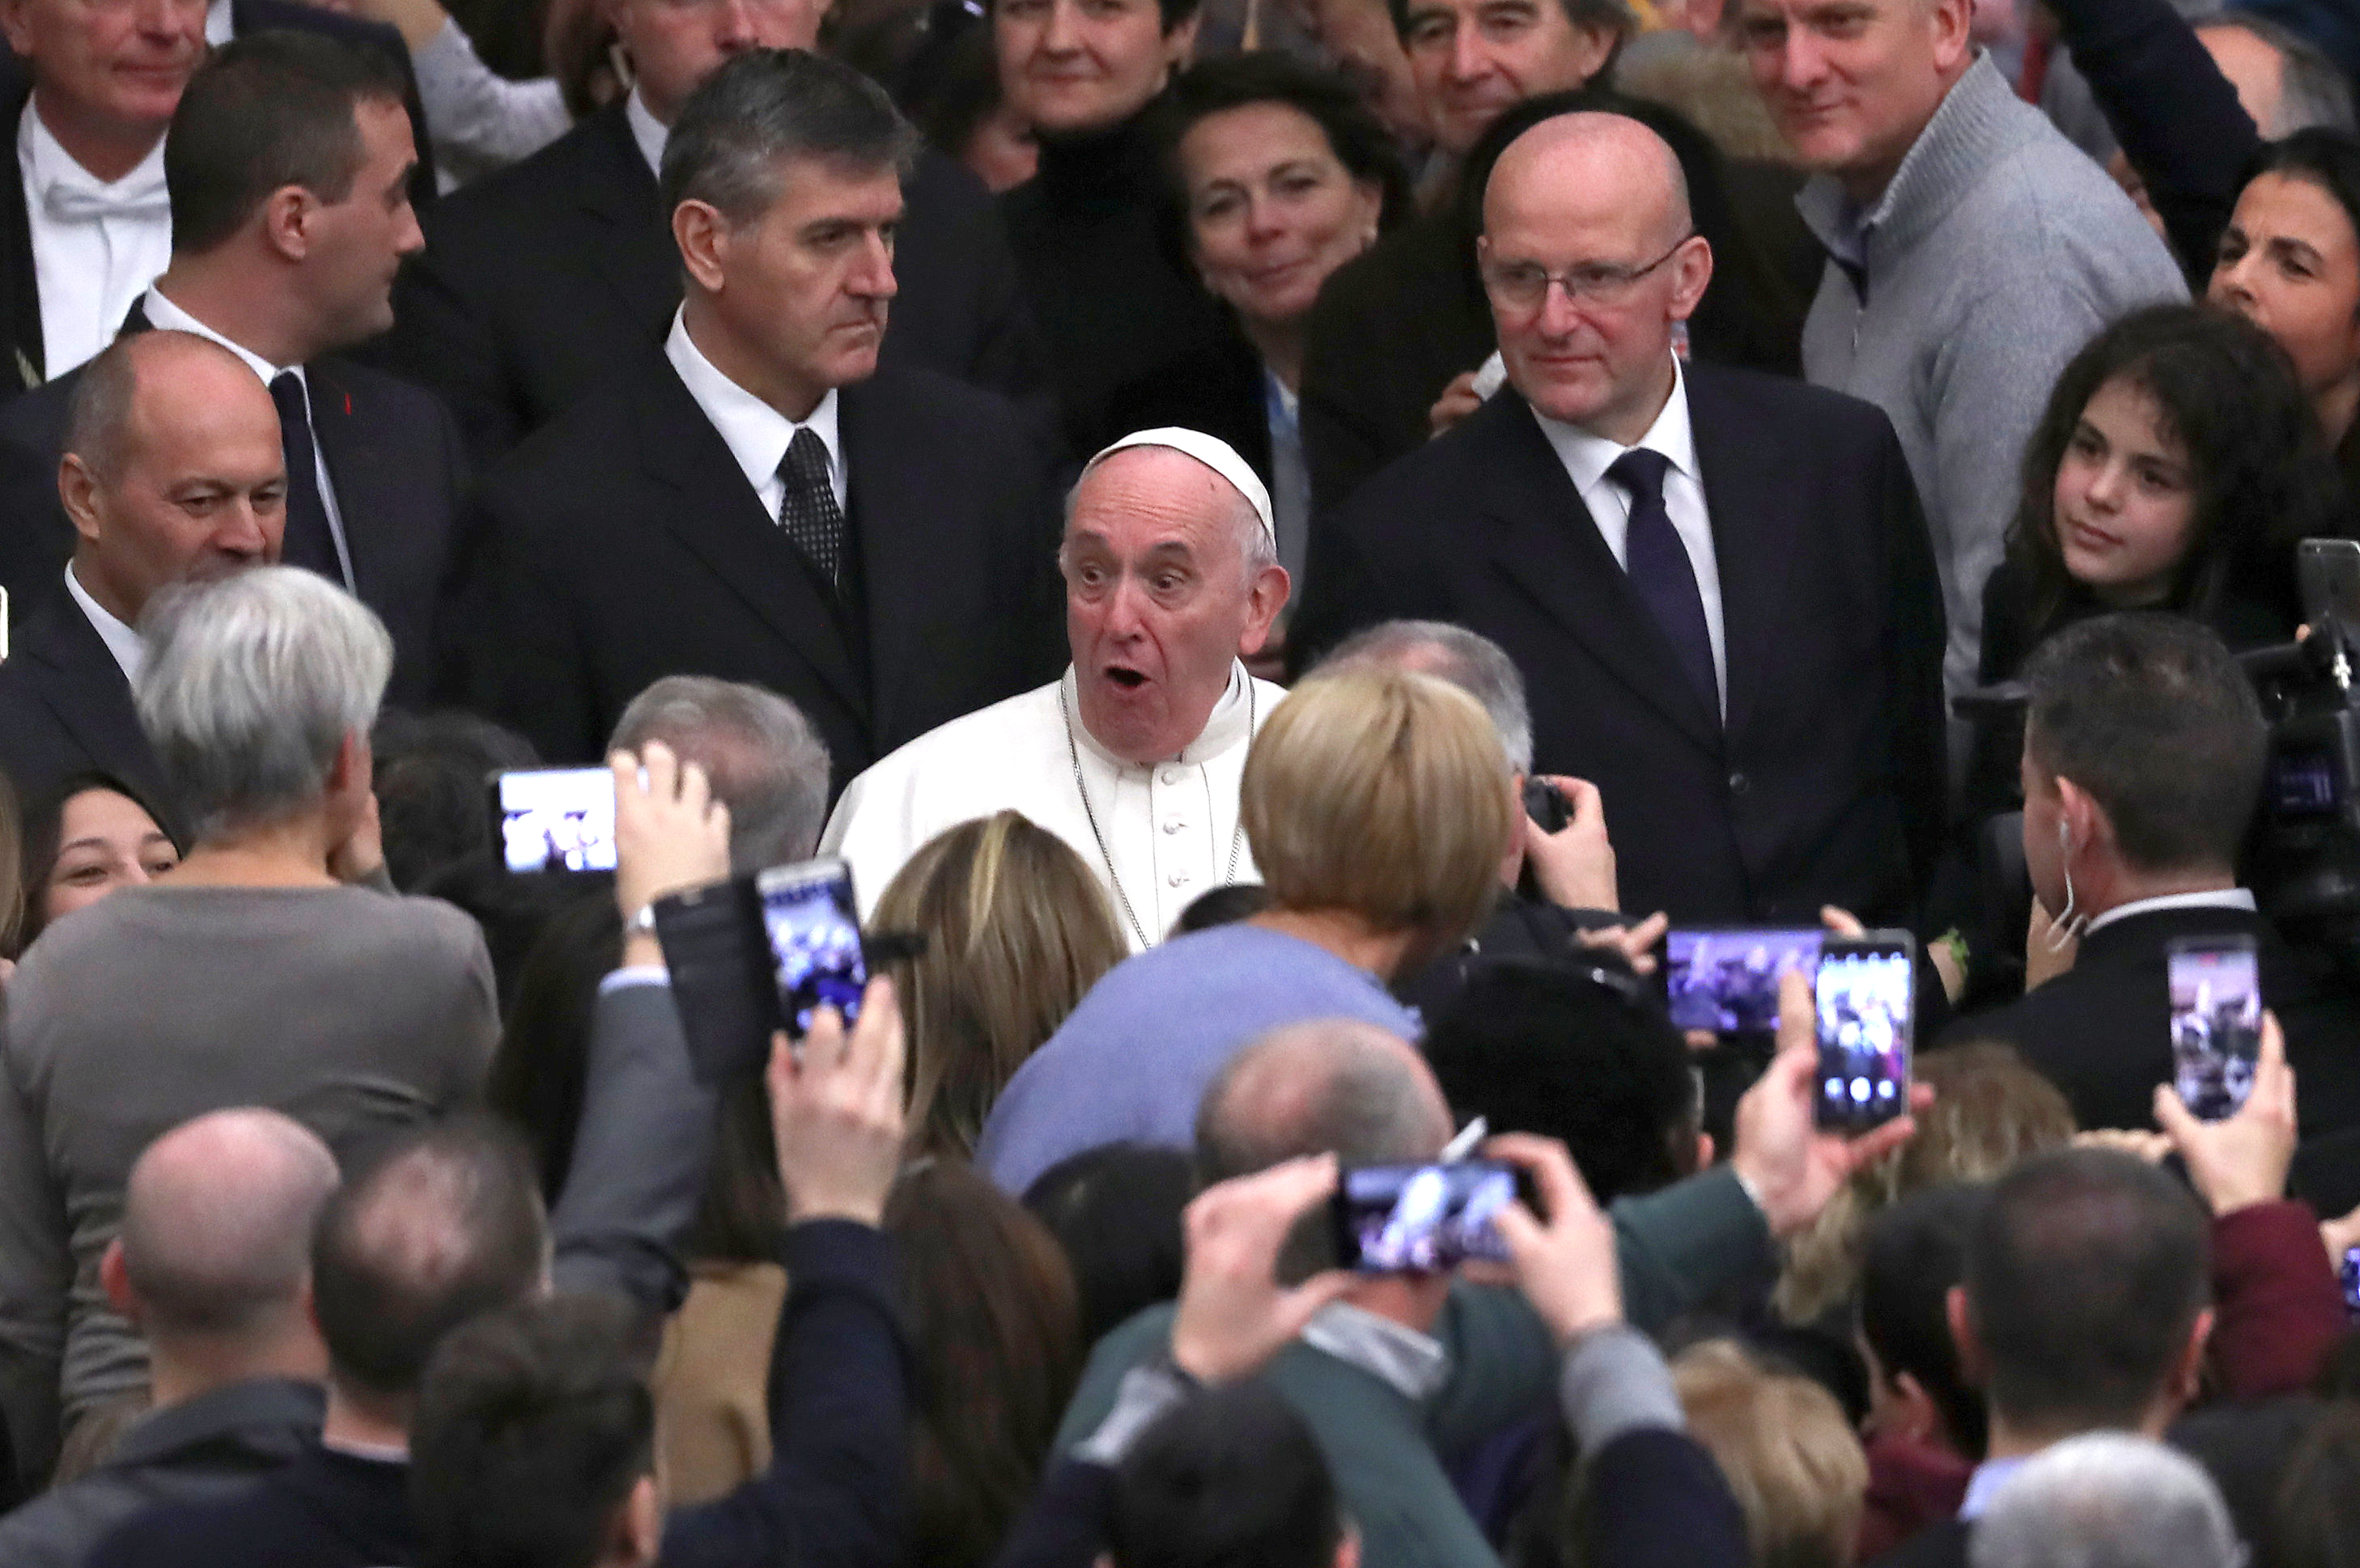 Being holy is what brings joy, pope tells Vatican employees